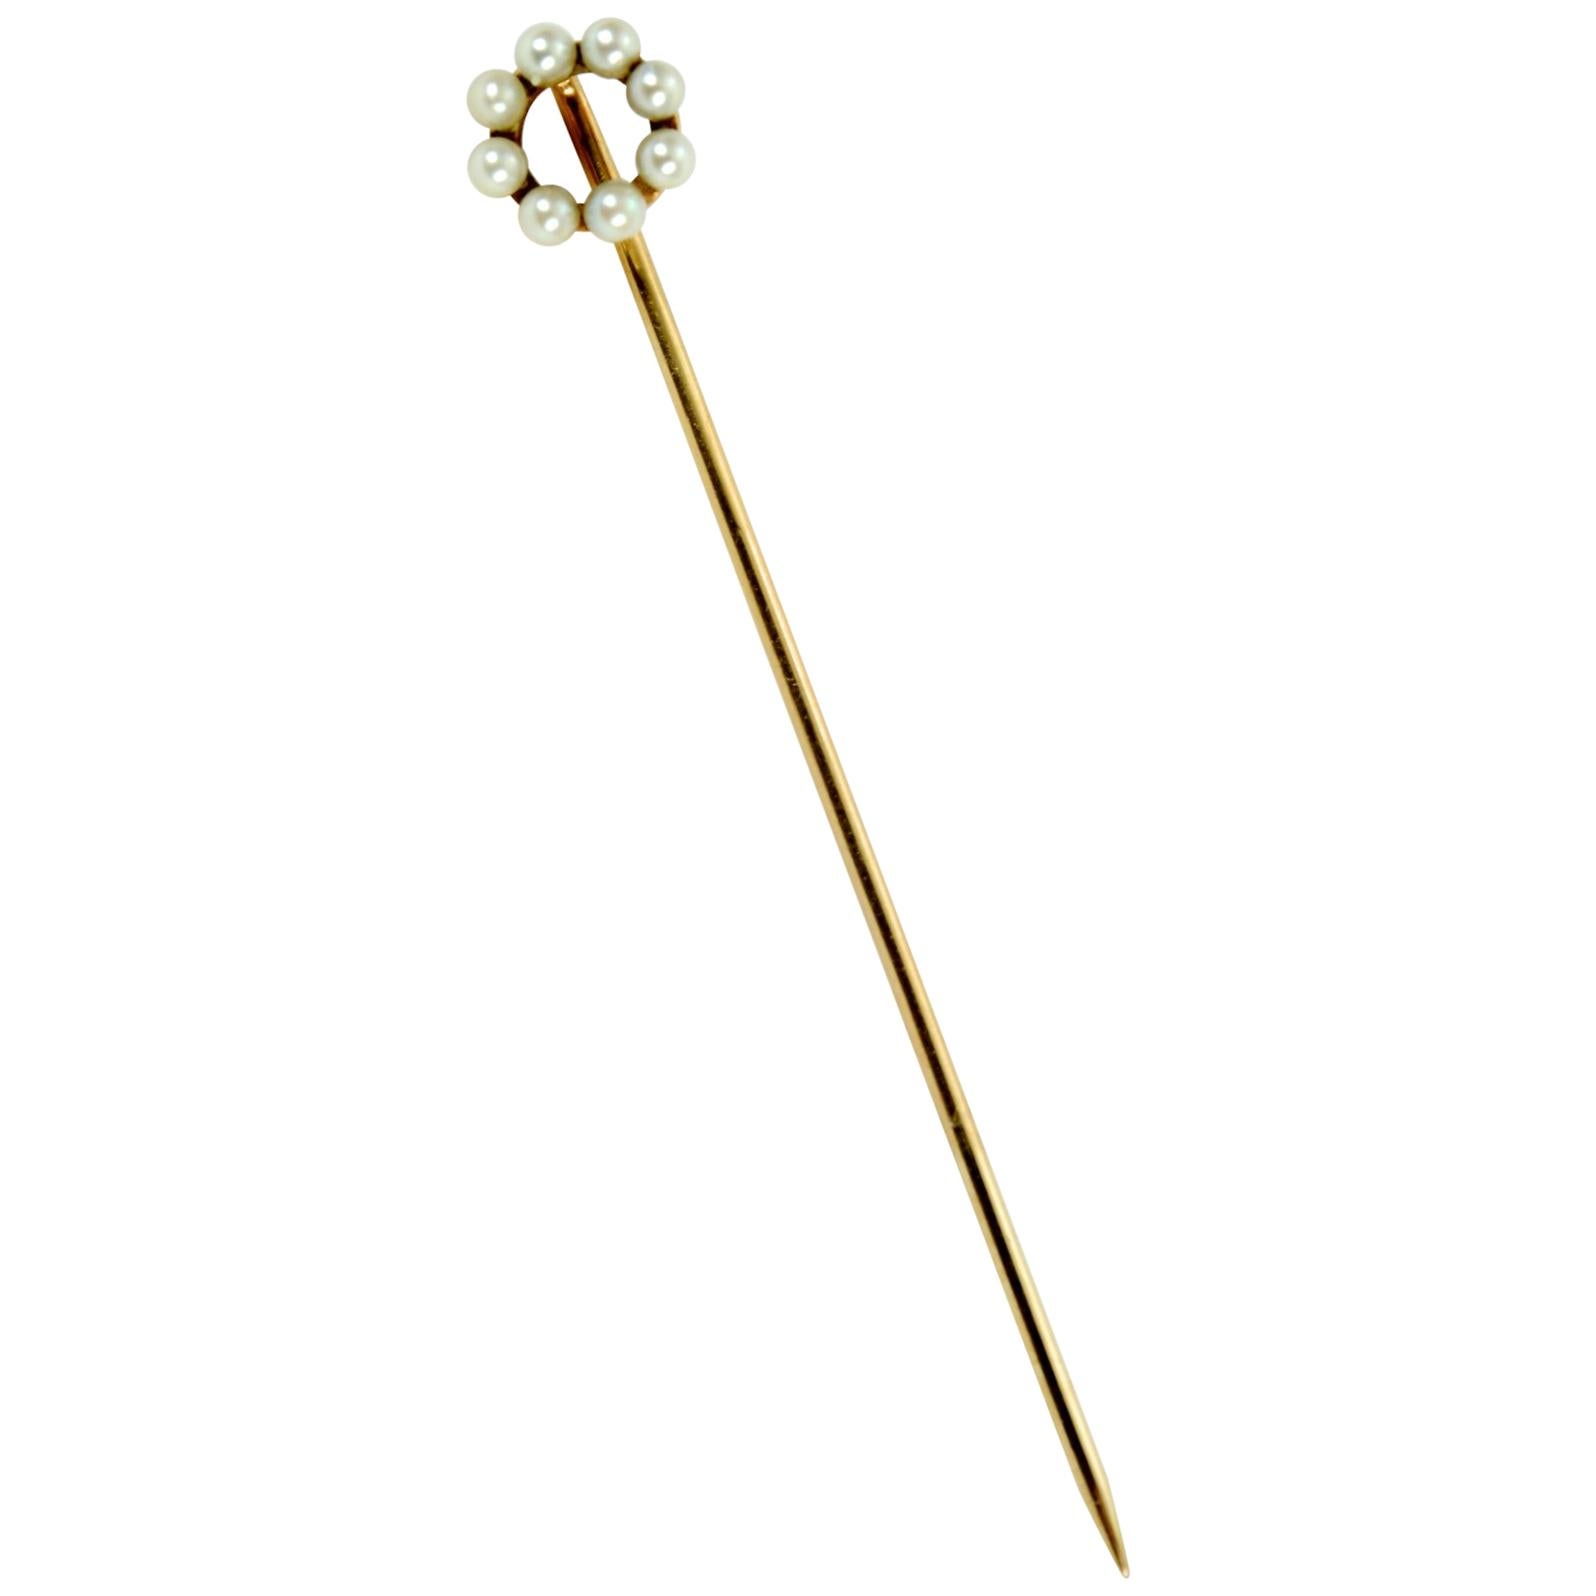 Stick Pin Set with 8 Seed Pearls in 14 Karat Yellow Gold, circa 1880